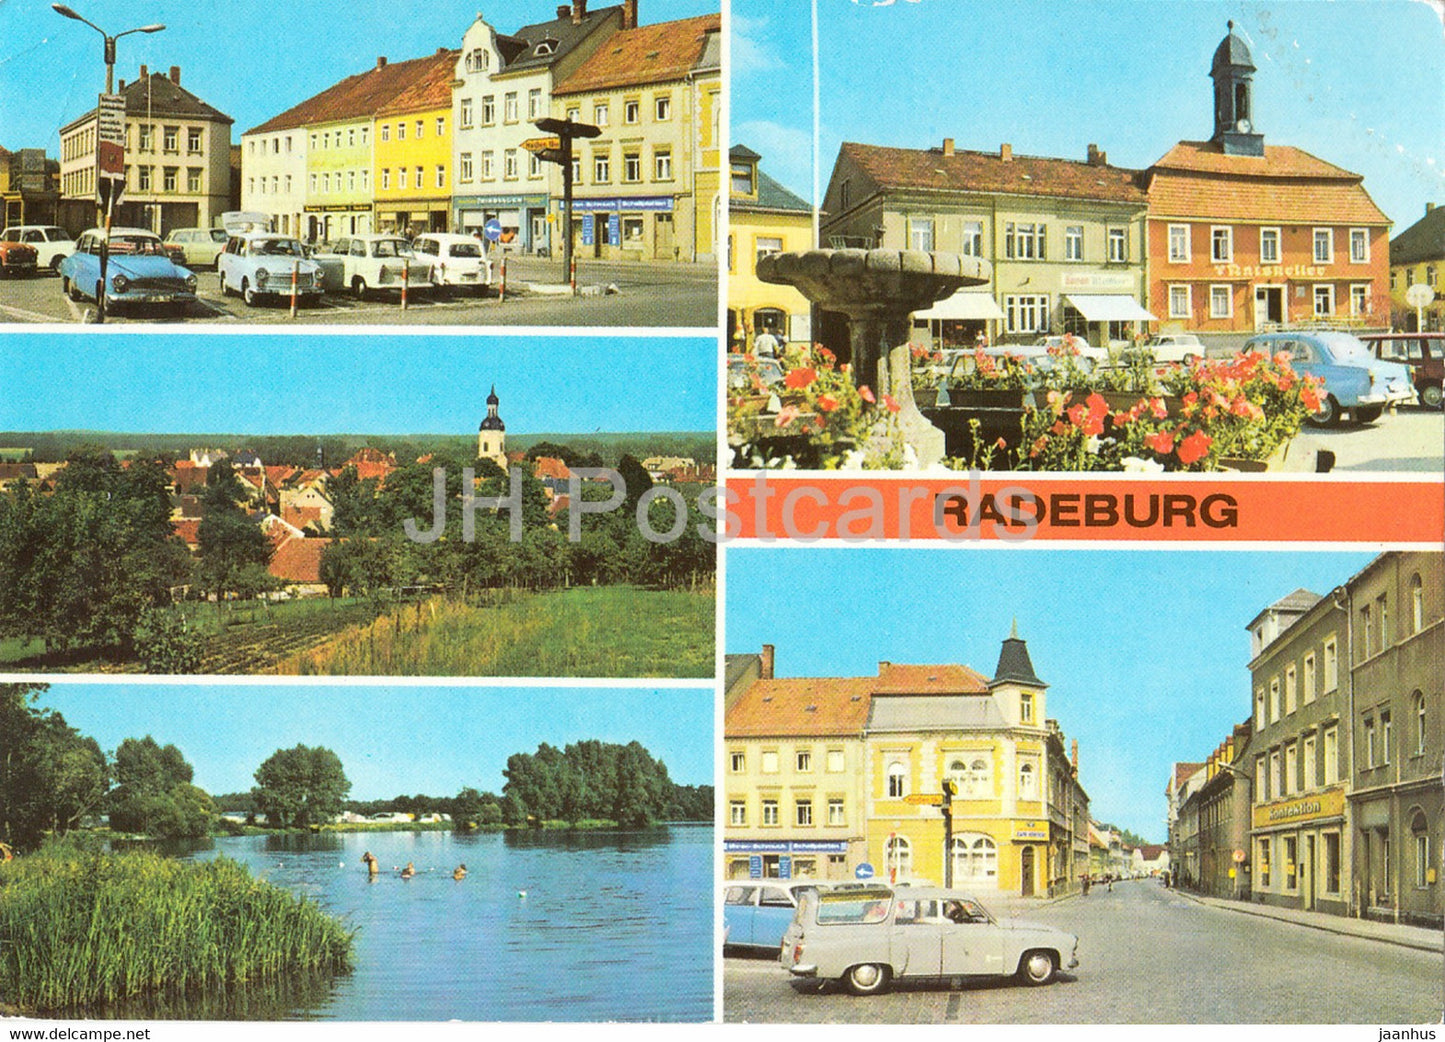 Radeburg - Platz des 8 Mai - Roderstausee - HOG Ratskeller - Heinrich Zille Strasse - car - Germany DDR - unused - JH Postcards